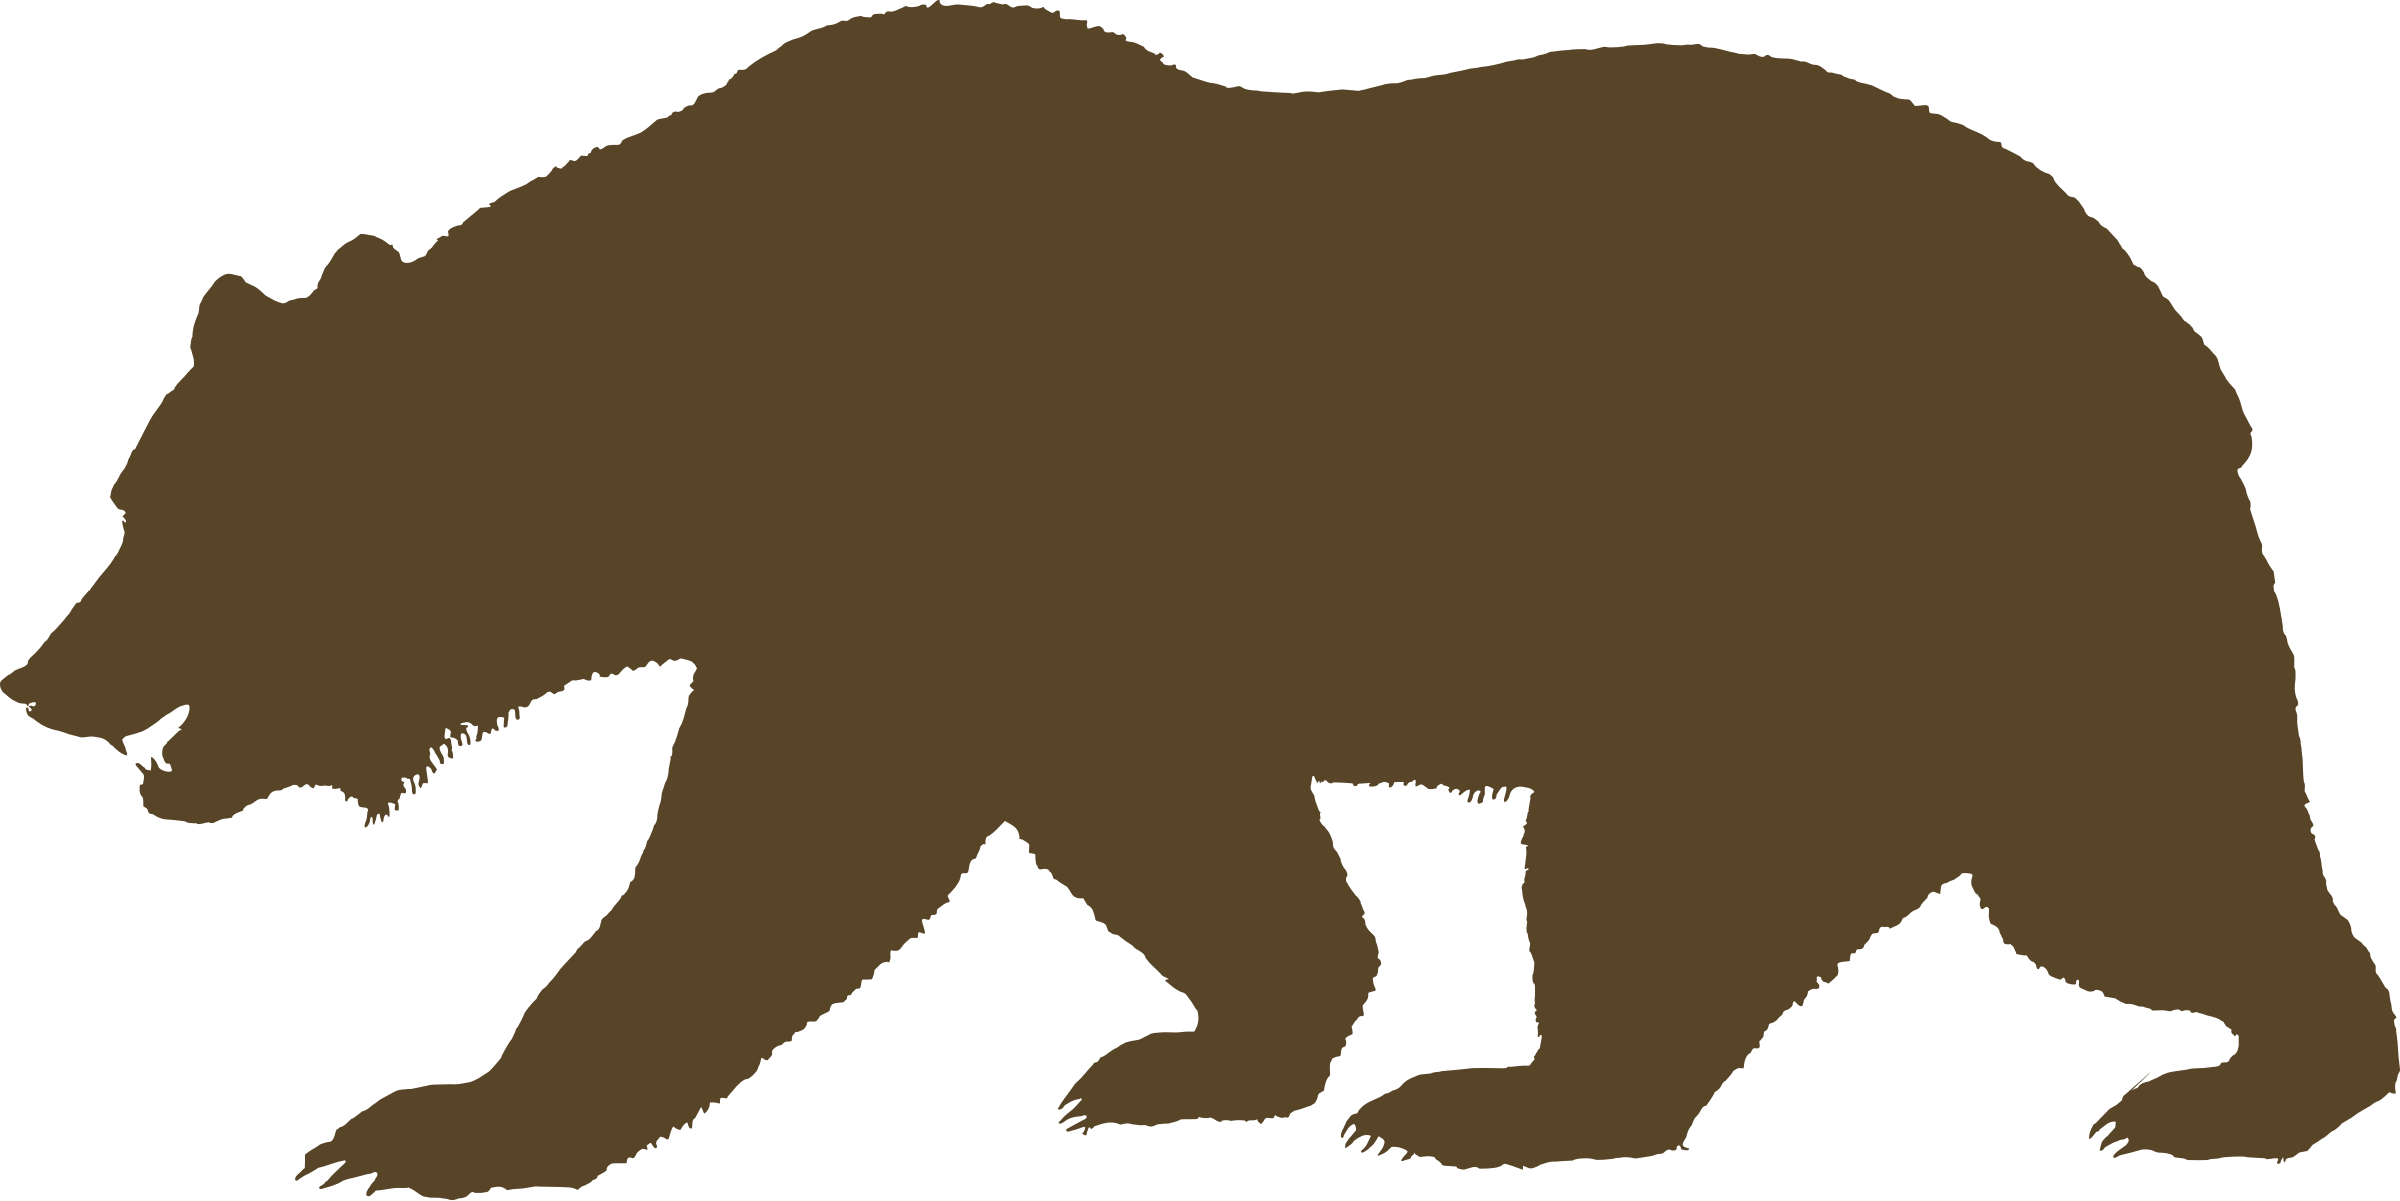 Free Image On Pixabay - California Bear Silhouette (2400x1201)